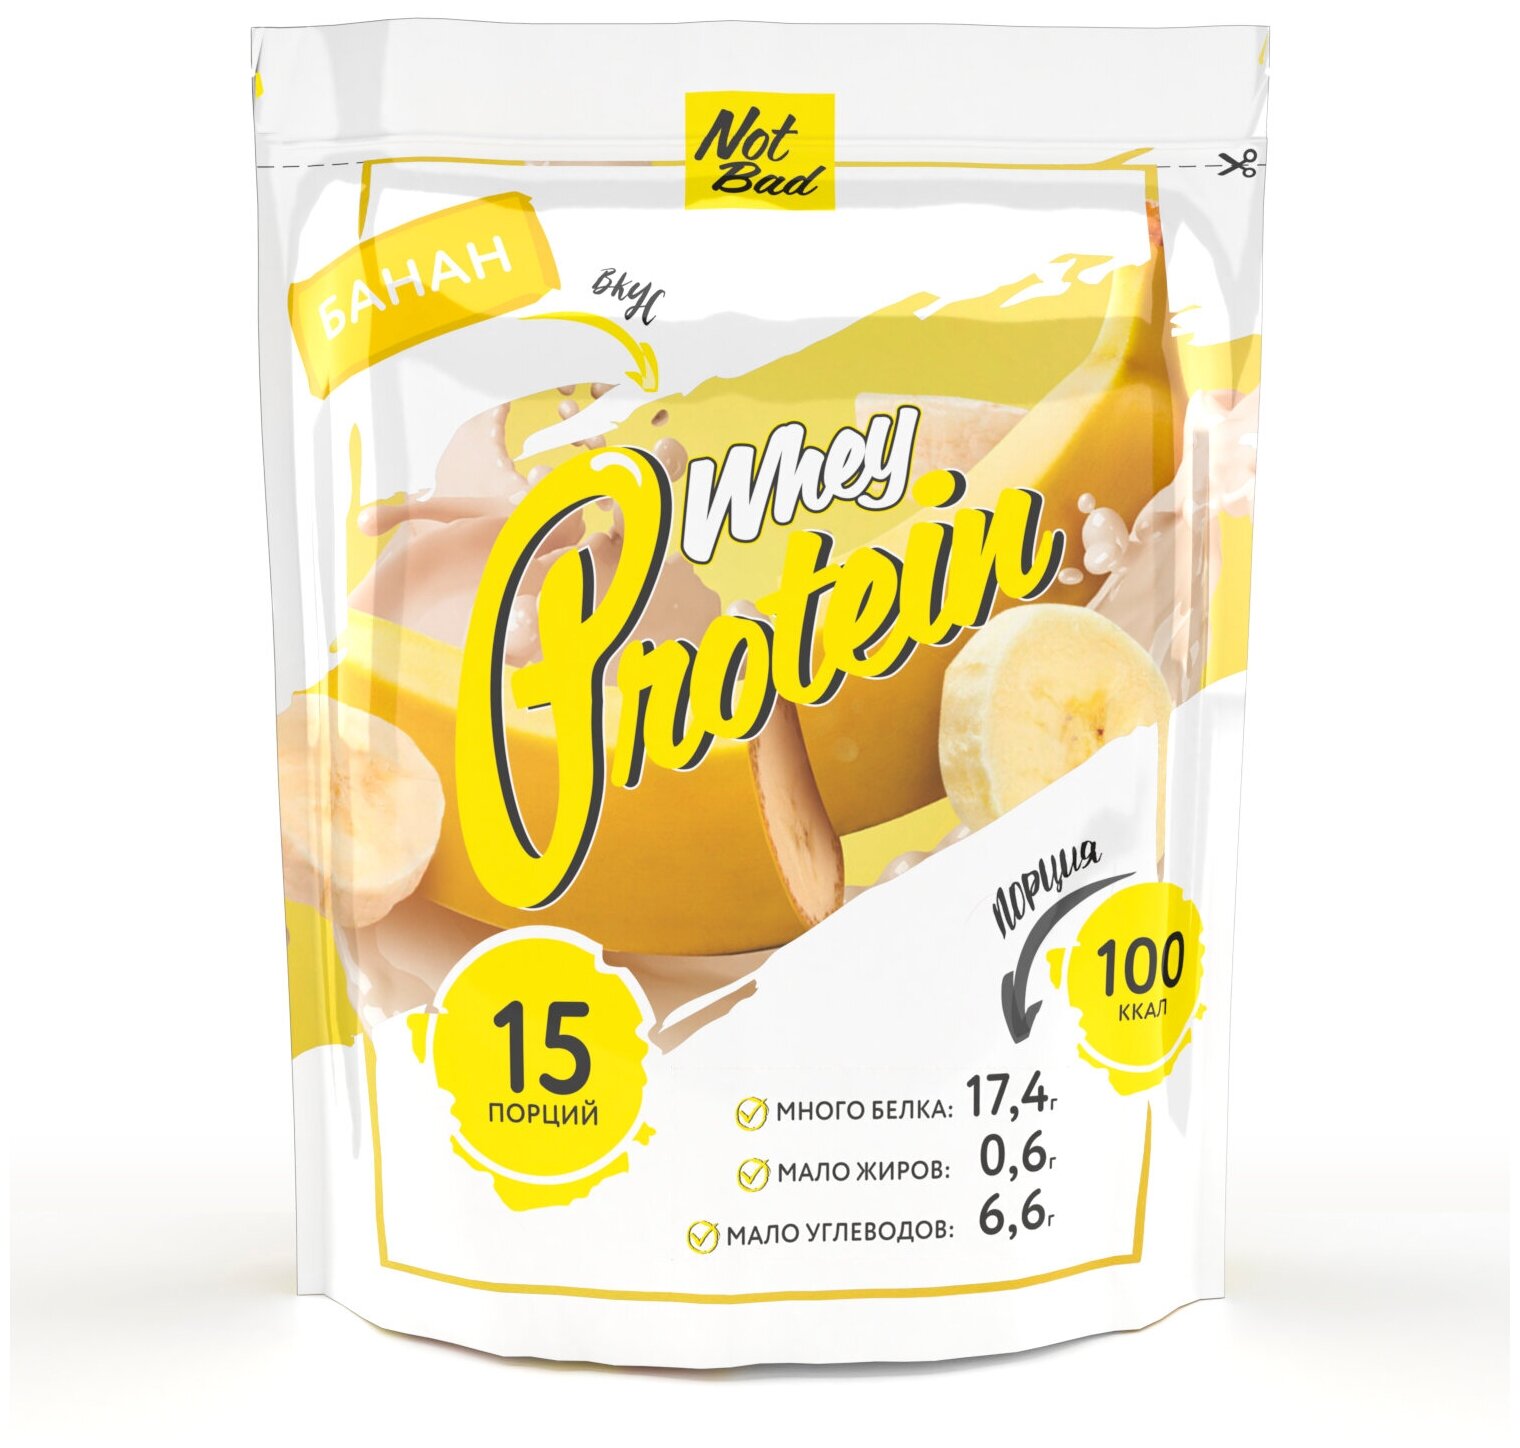 NOTBAD Whey Protein 450 г (Банан)